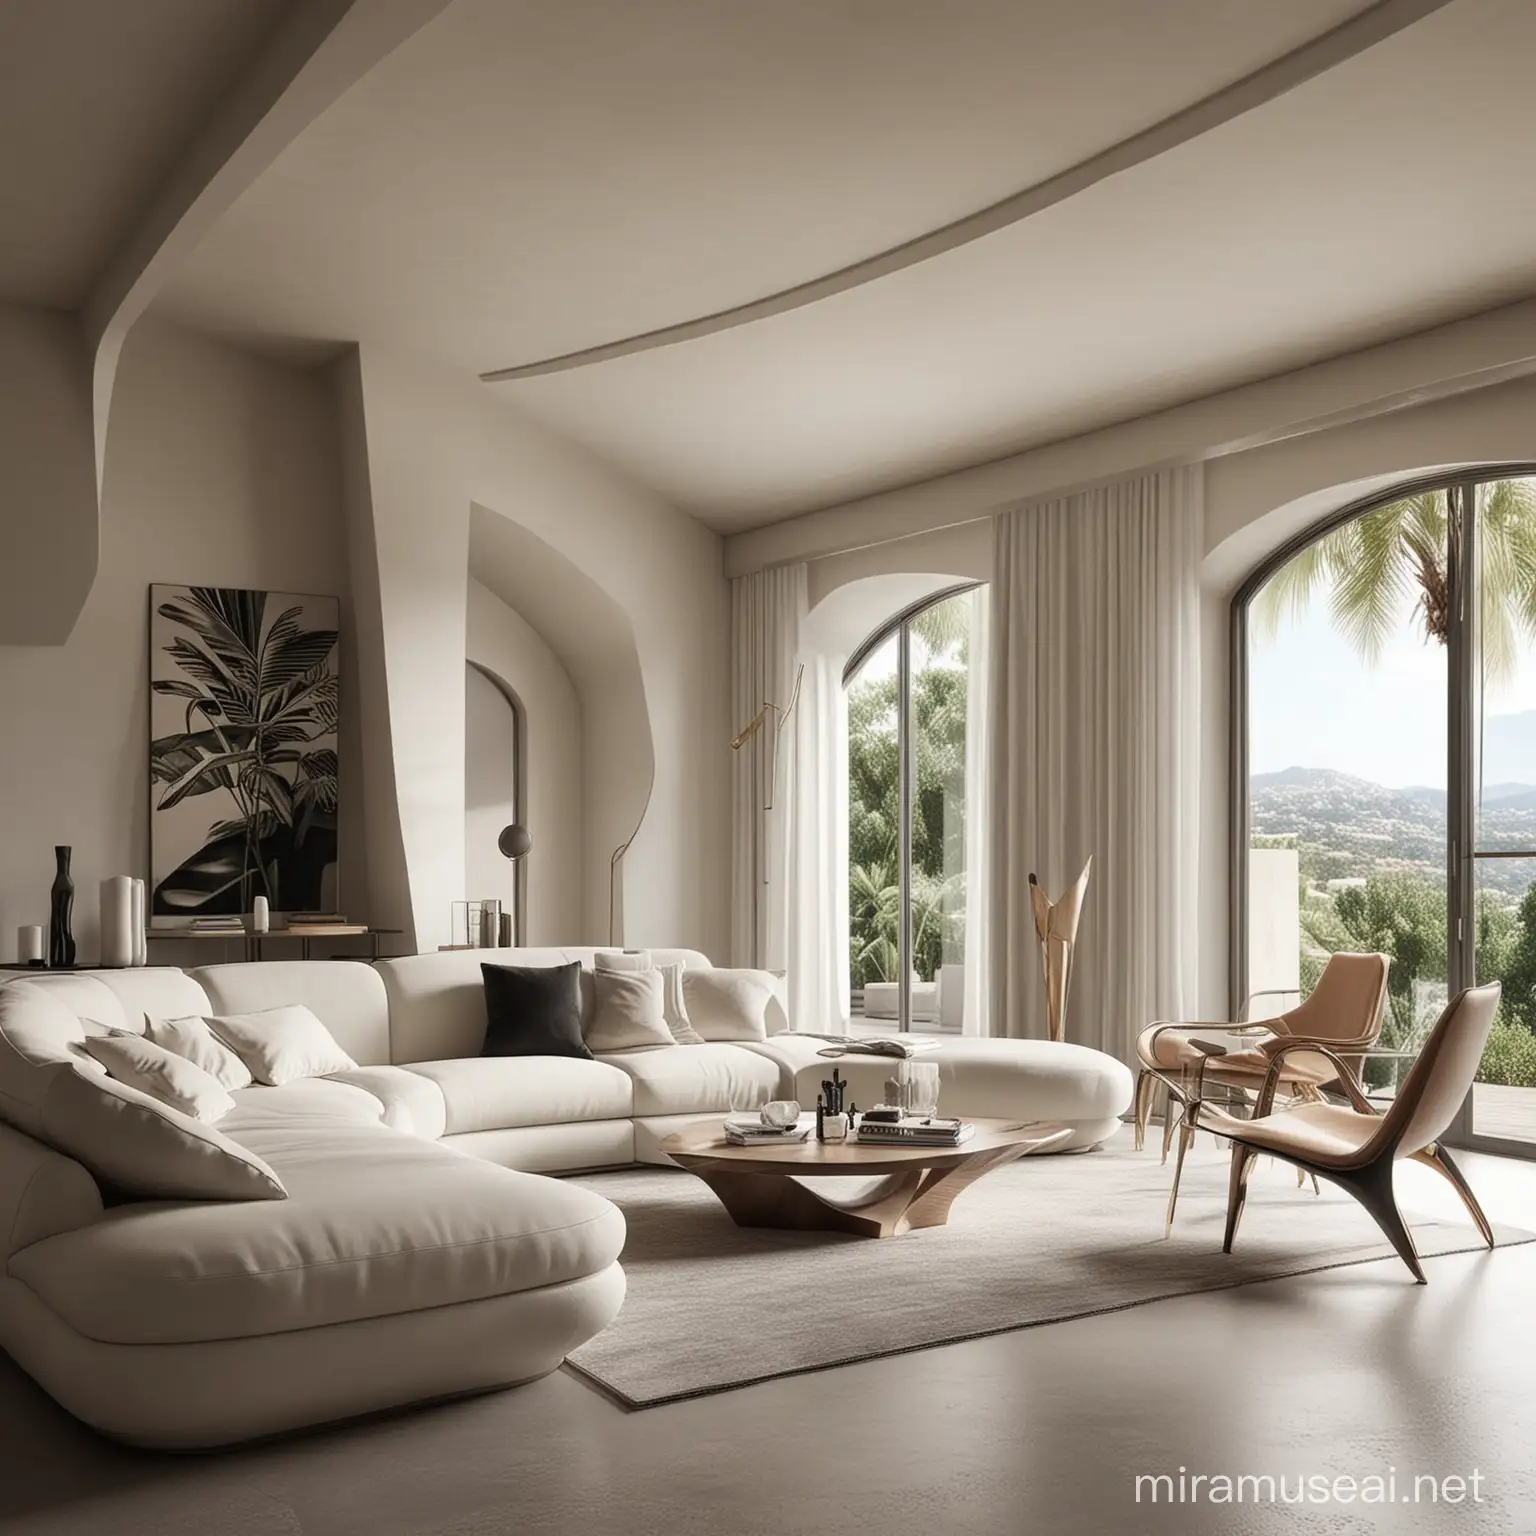 Futuristic Tropical Sicily Living Room Inspired by Zaha Hadid